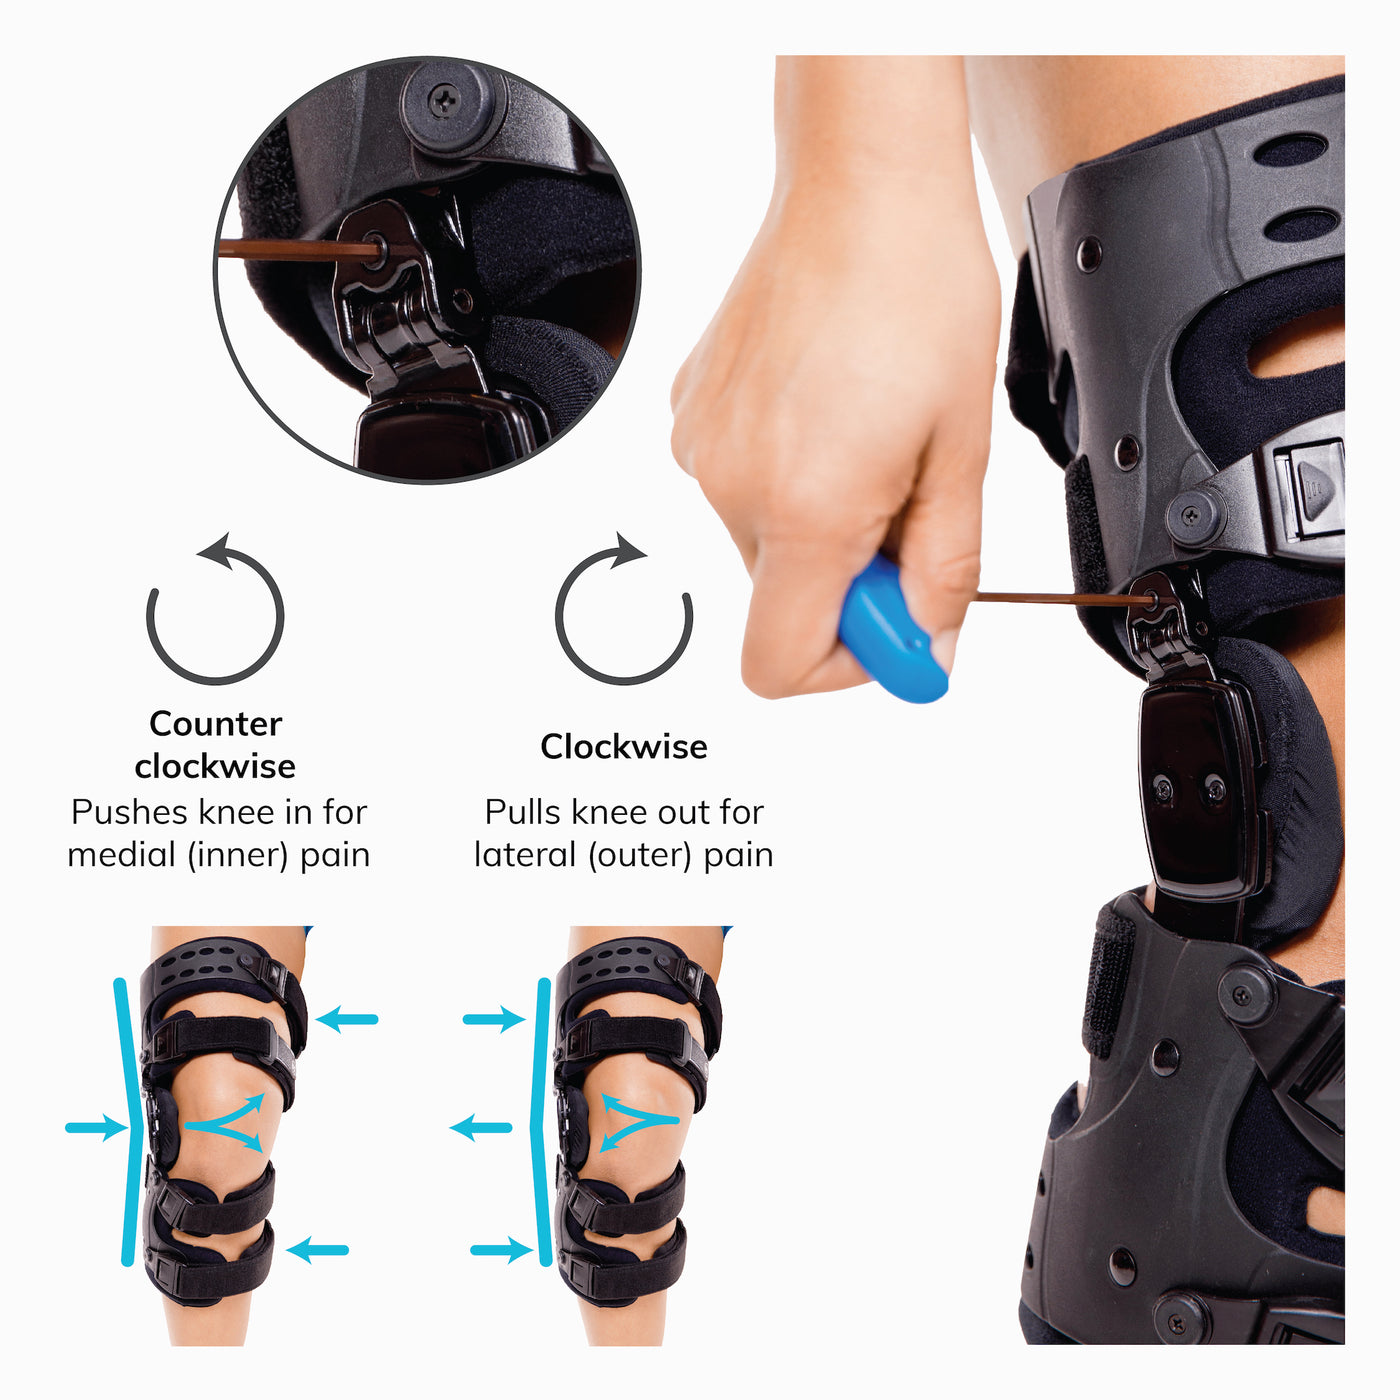  OA Unloader Knee Brace - Arthritis Pain Relief